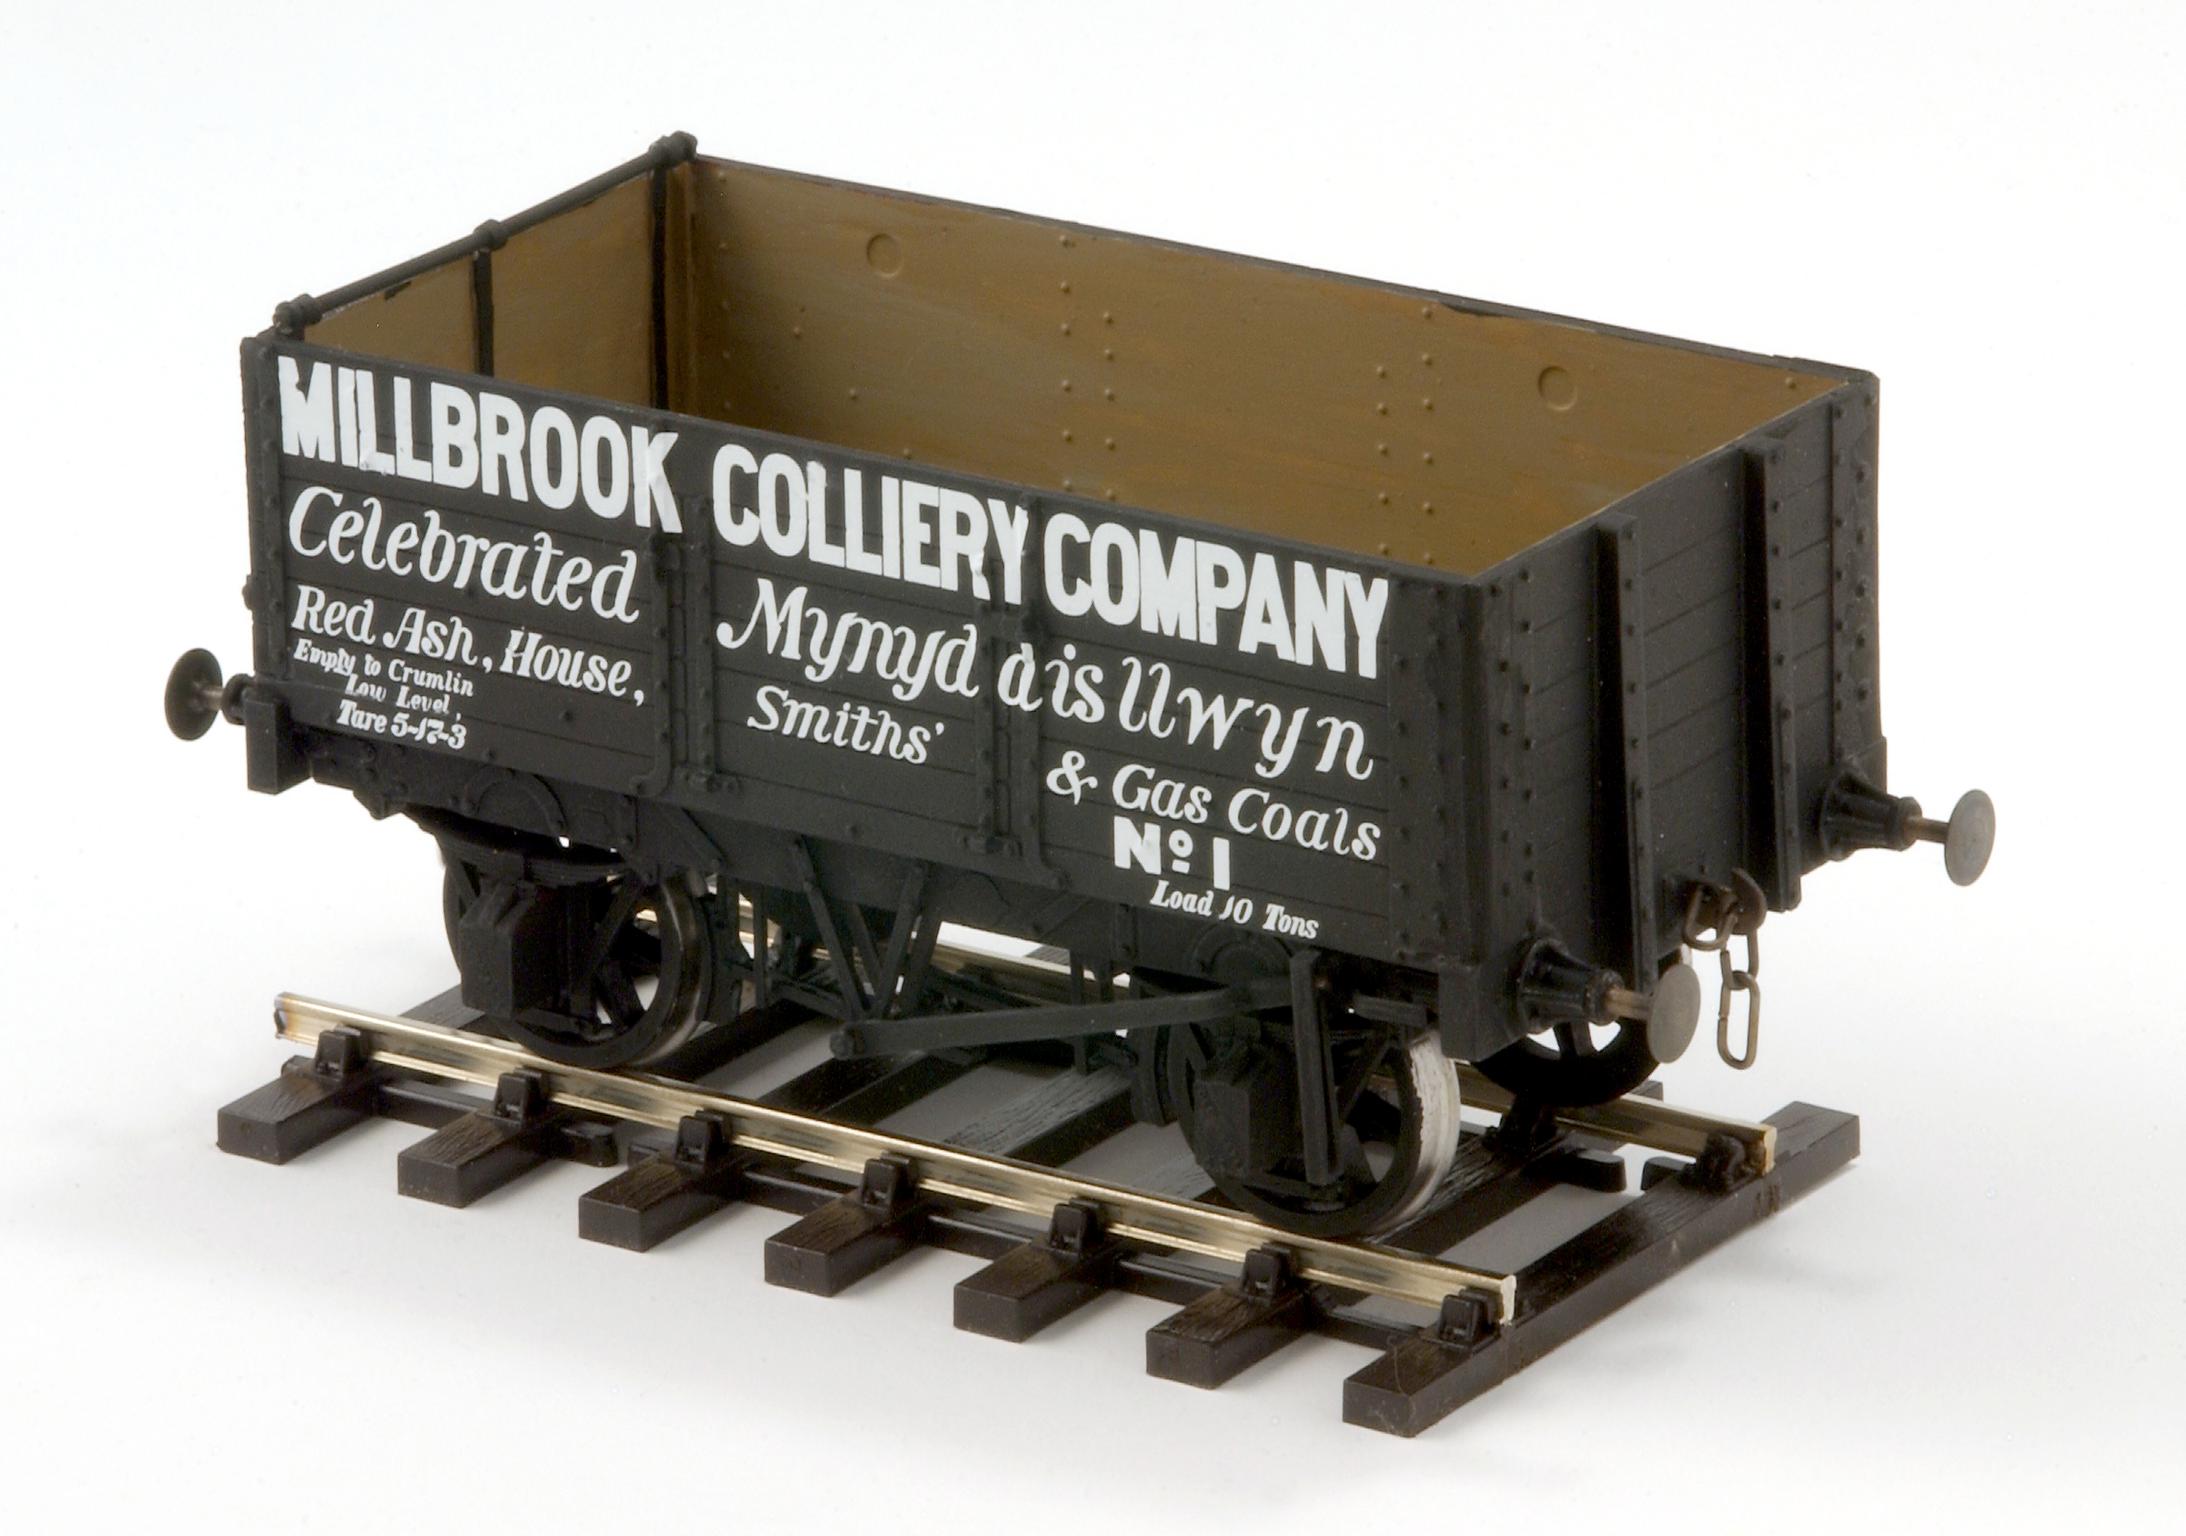 Millbrook Colliery Company, coal wagon model